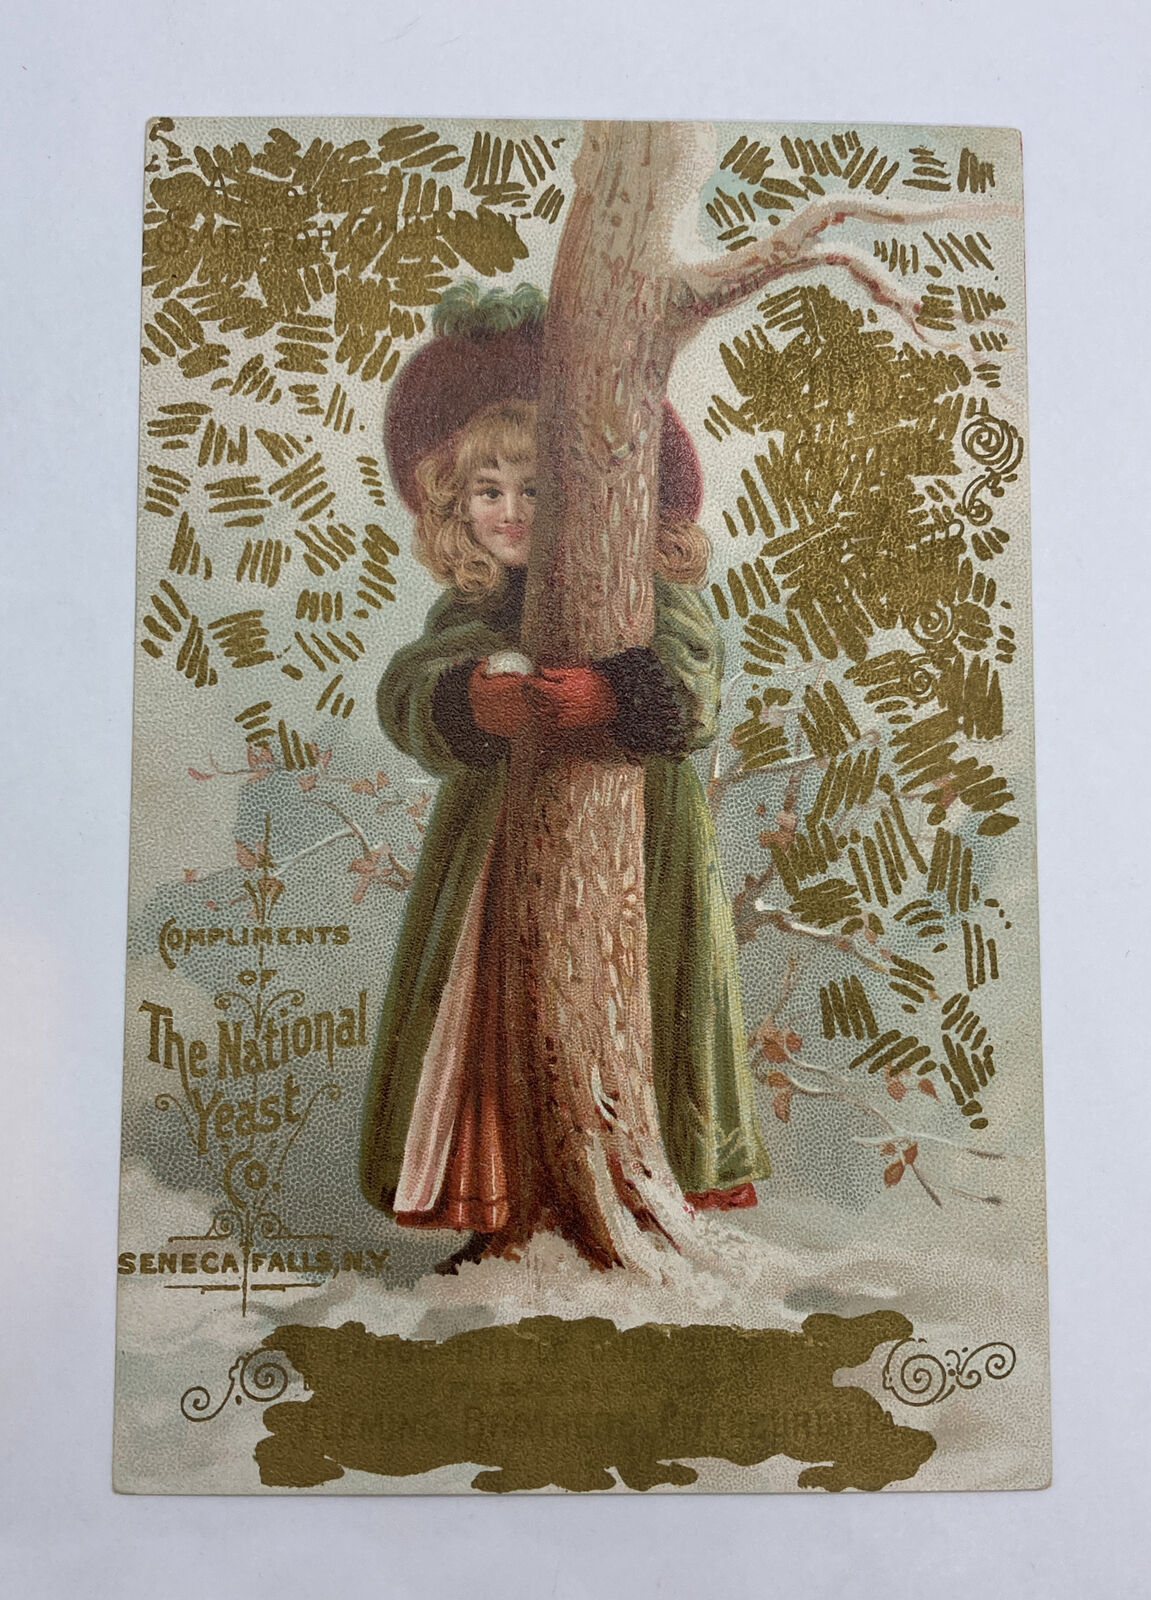 The National Yeast Co Seneca Falls Ny Trade Card Victorian Girl Hugging Tree